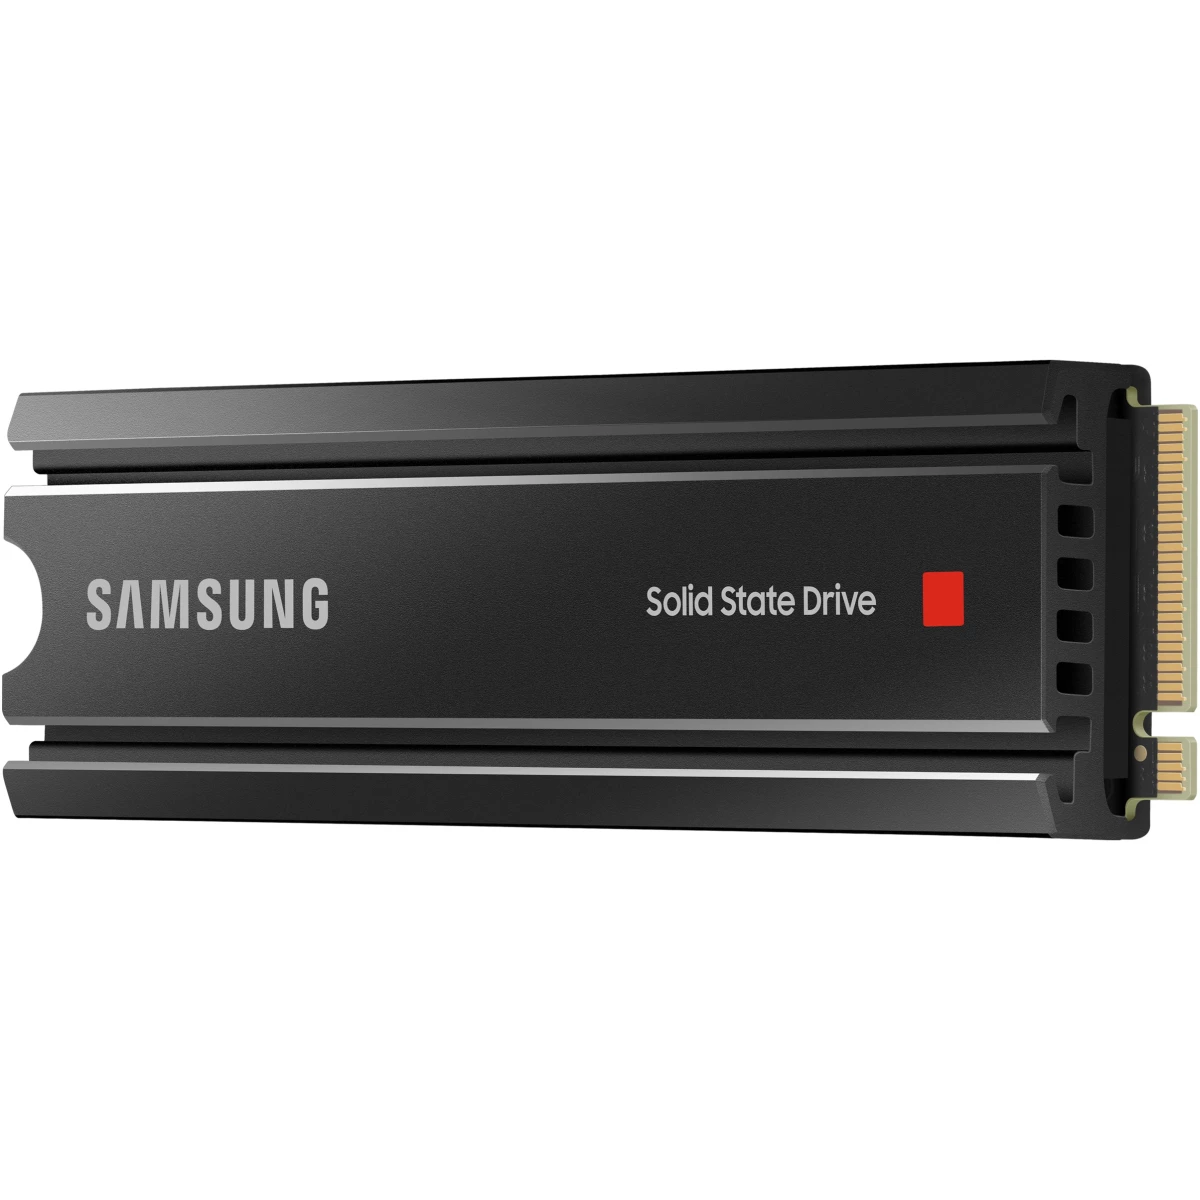 SSD M.2 1TB Samsung 980 PRO Heatsink NVMe PCIe 4.0 x 4 retail